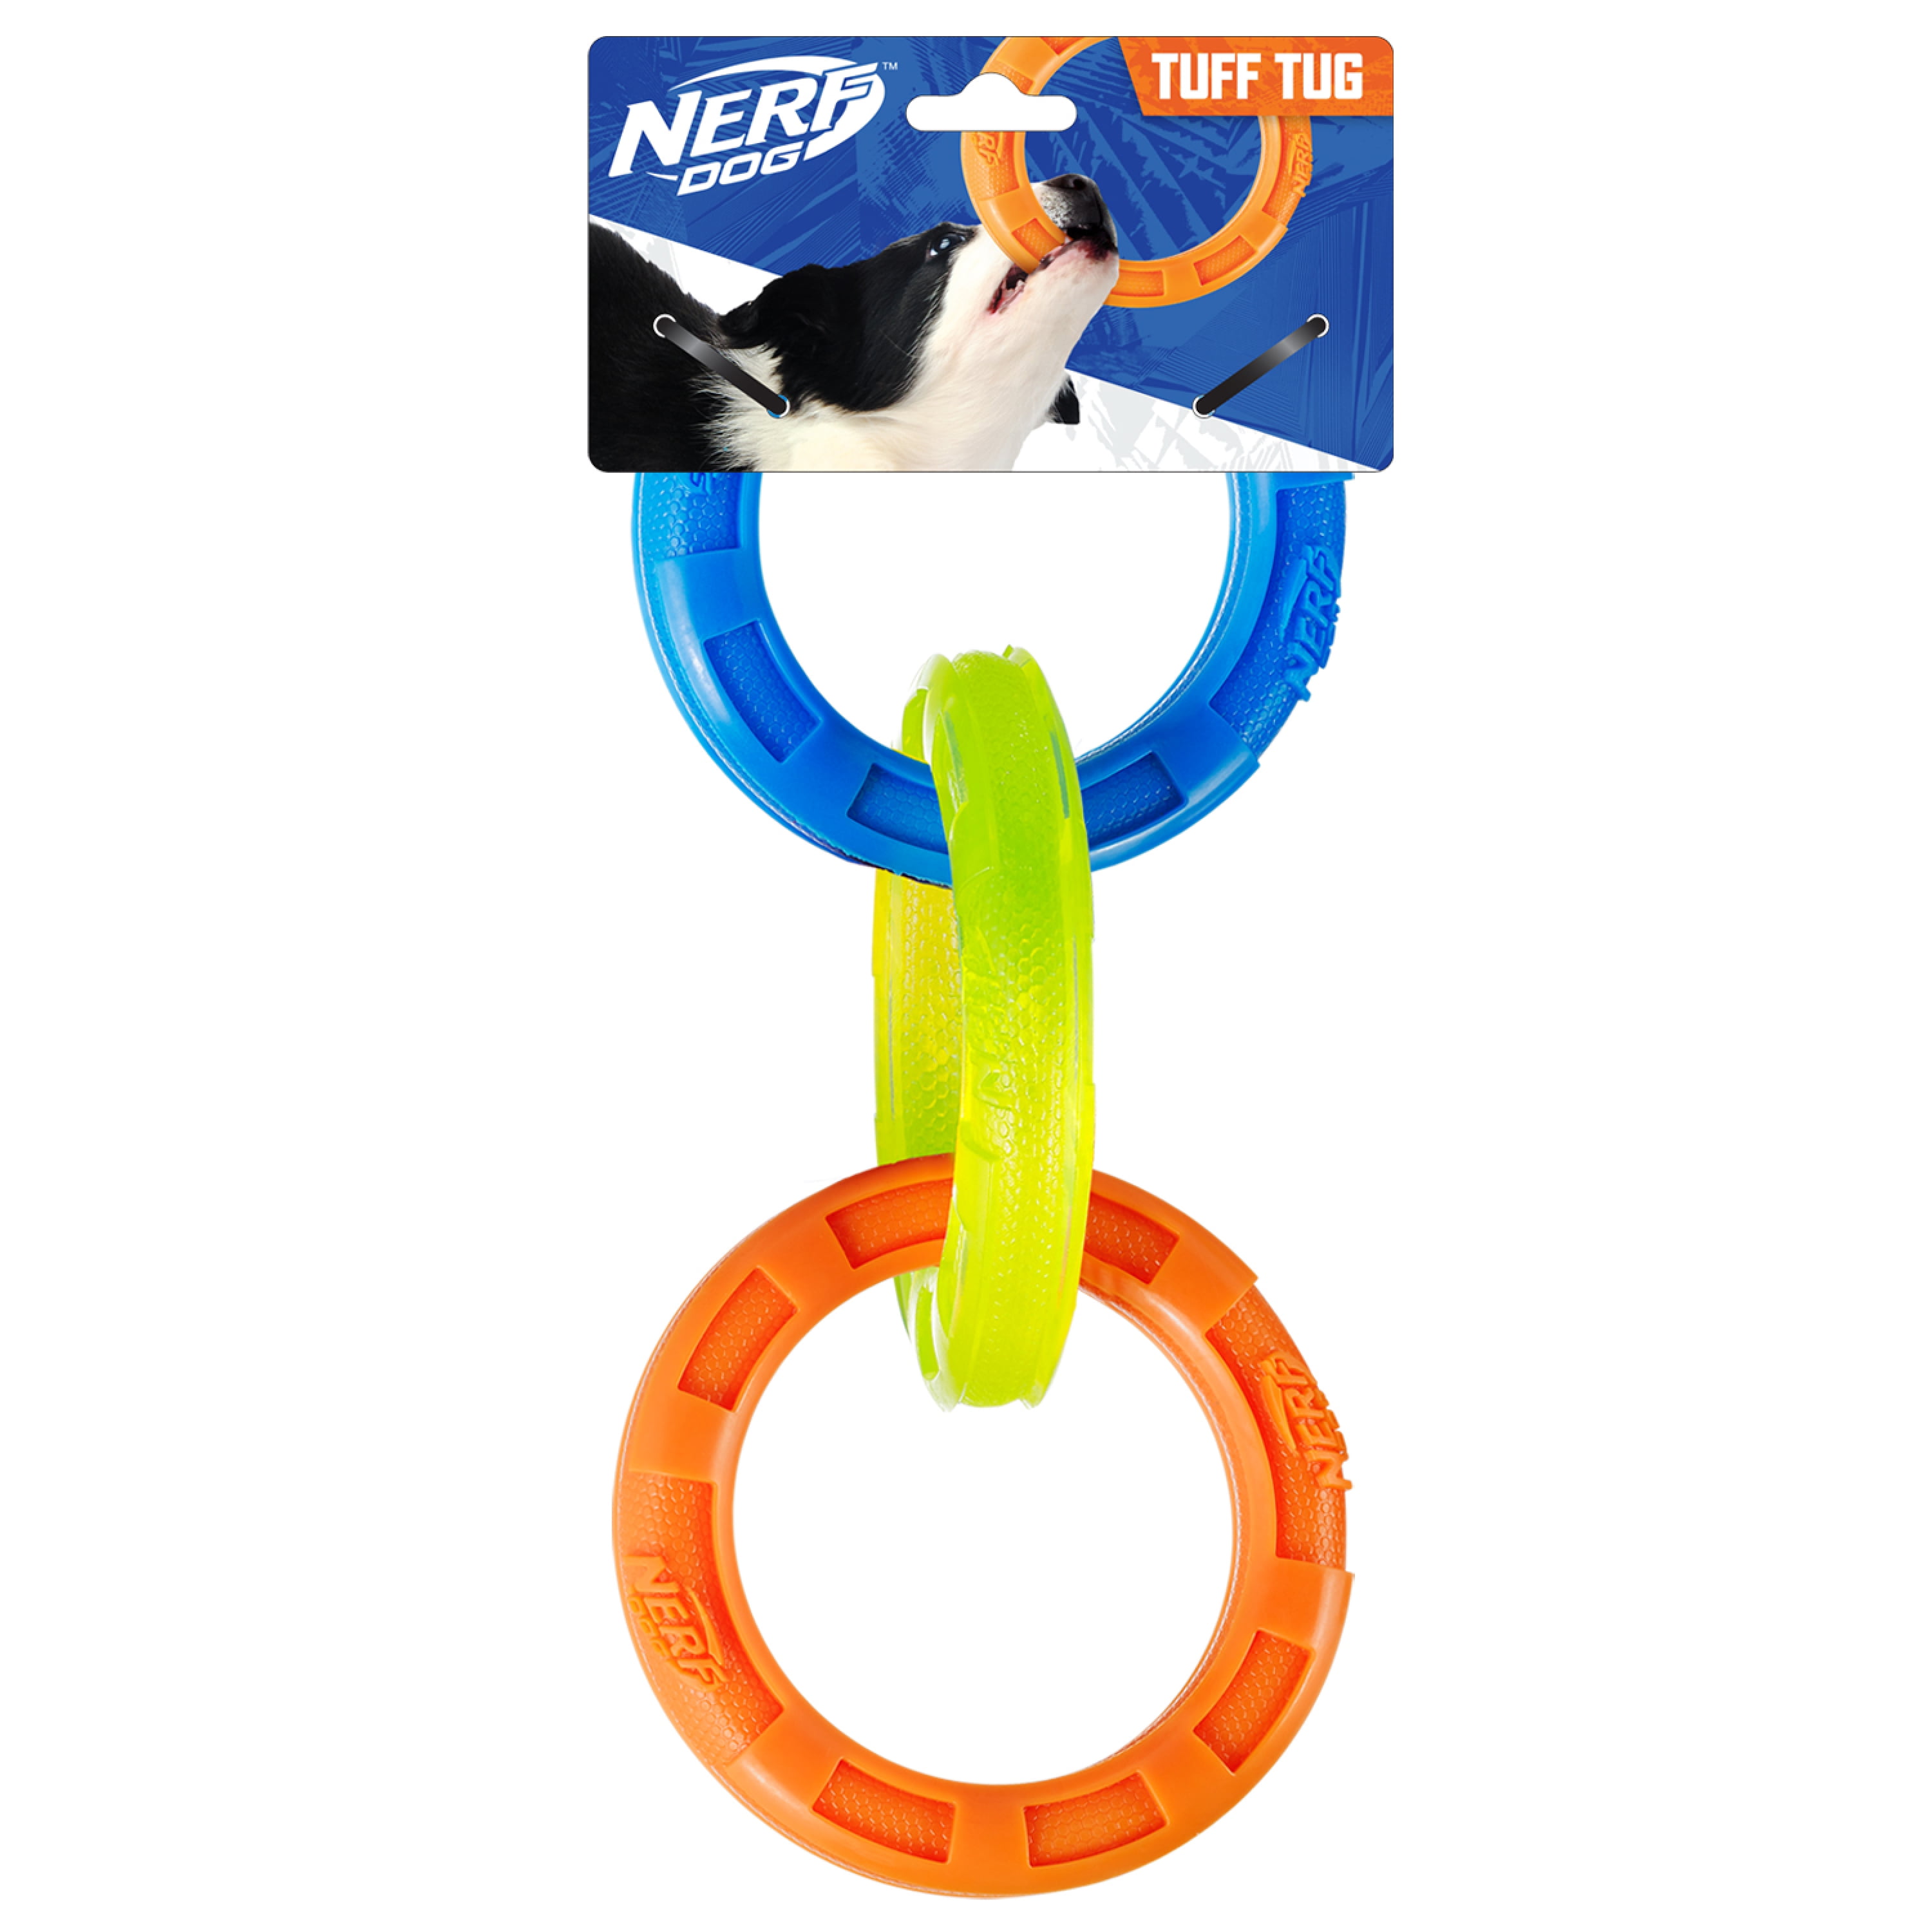 Nerf Dog Rubber 3-Ring Tuff Tug Dog Toy for Medium/Large Dogs, Lightweight Tug & Chew Toy, 10.5